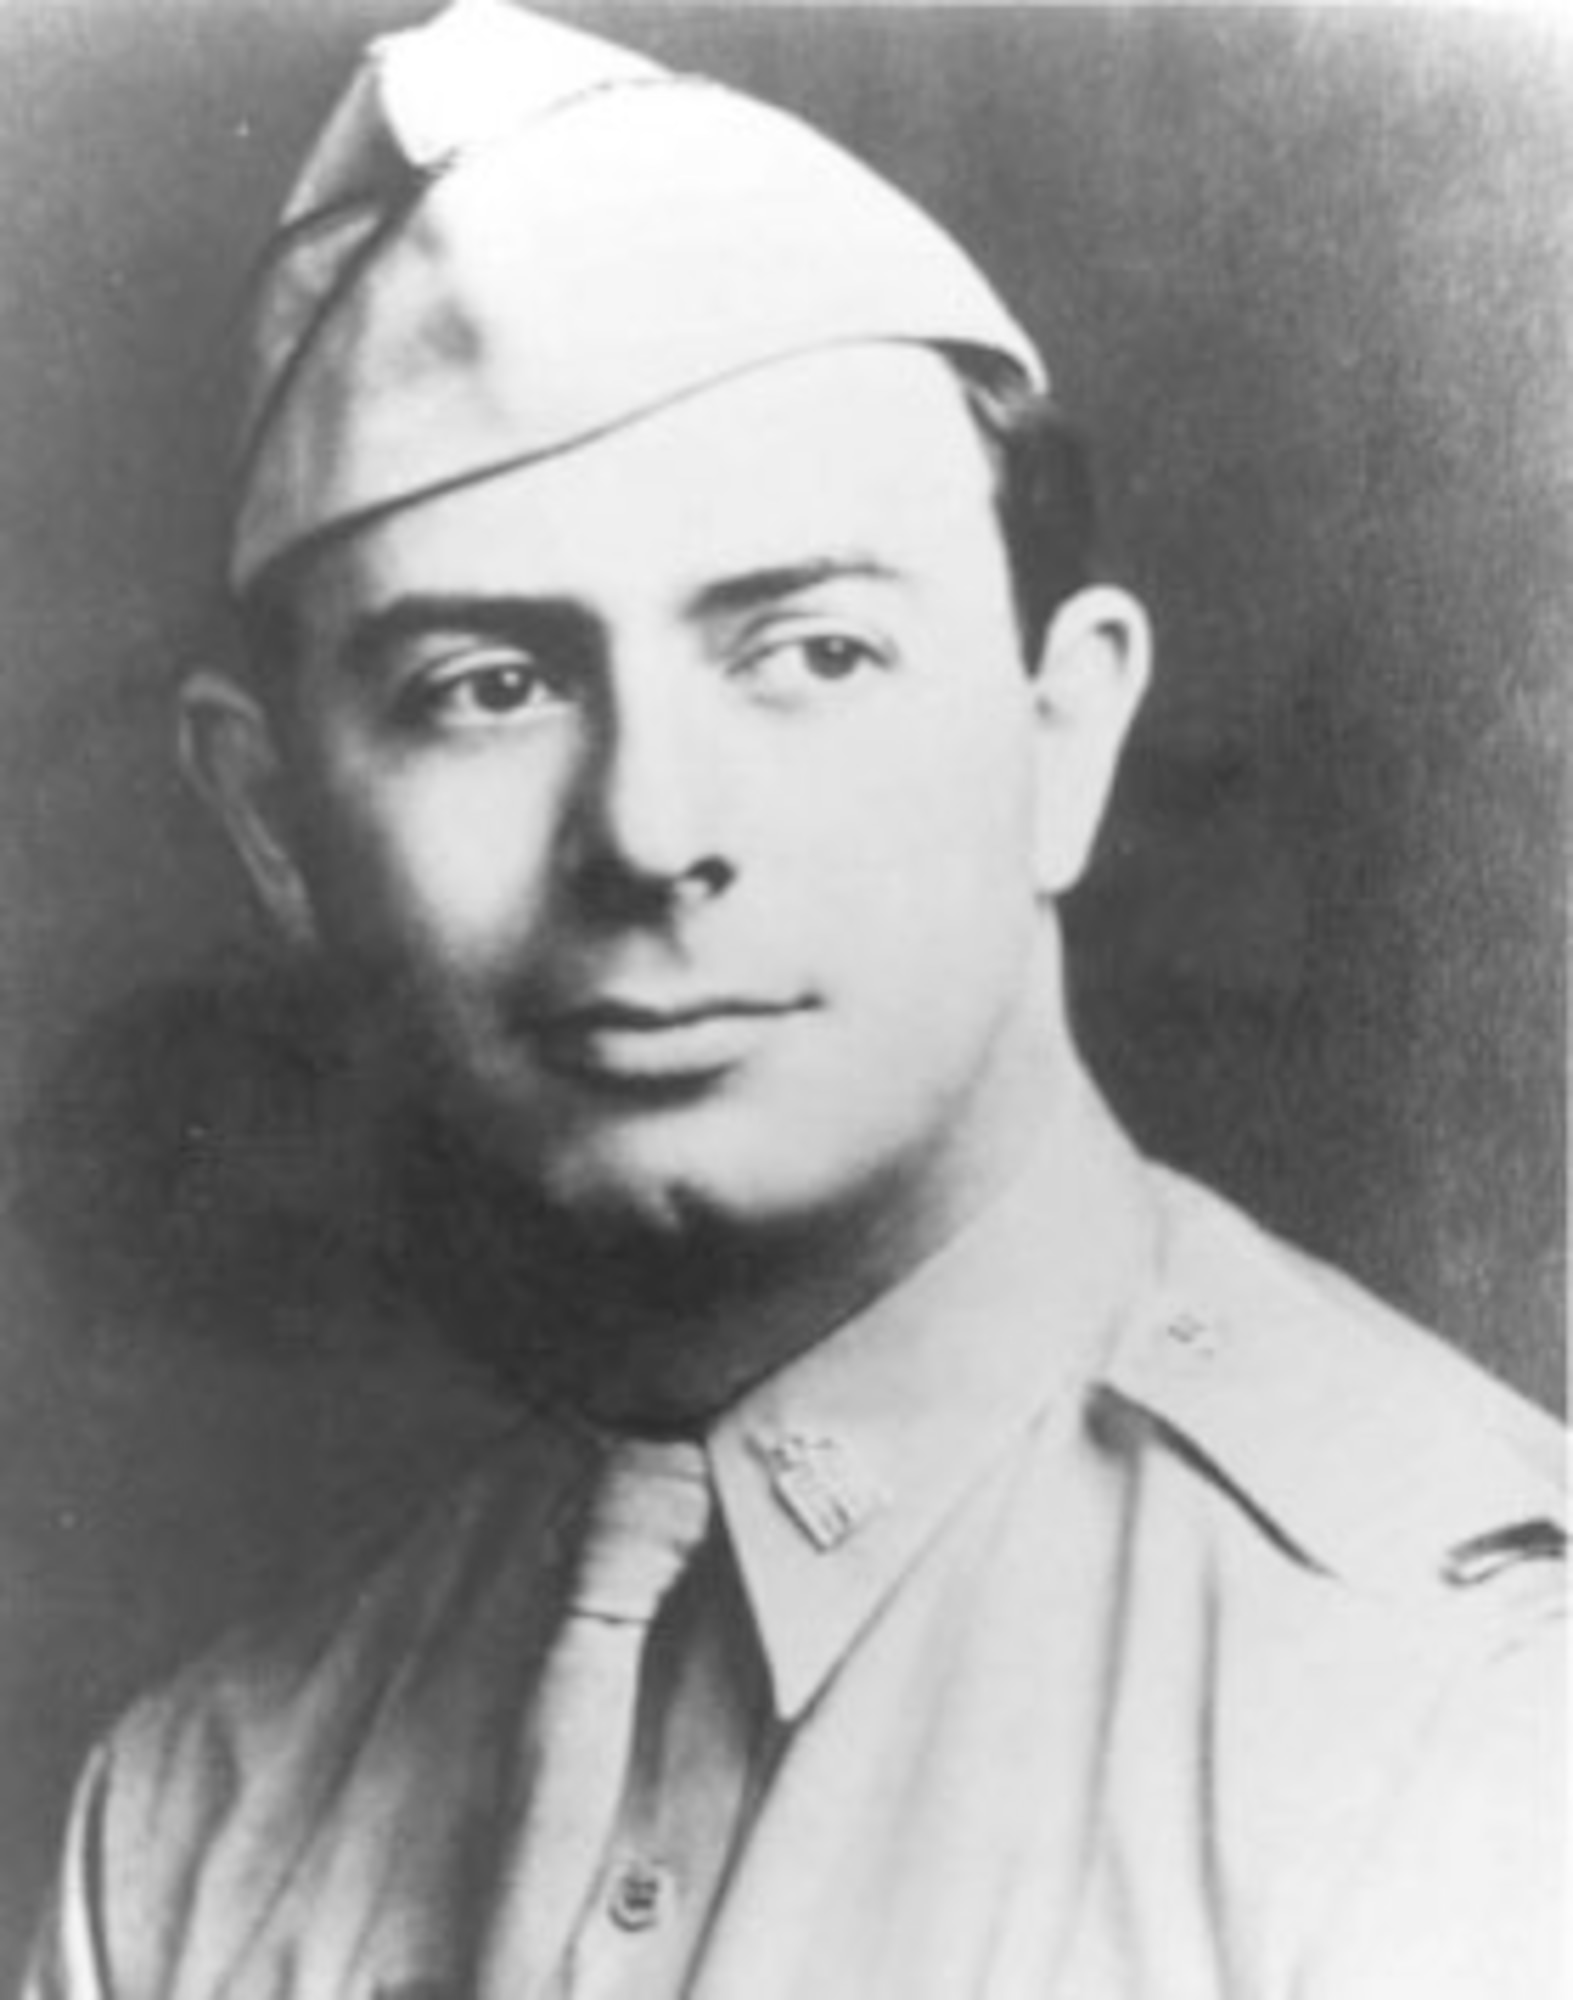 Lt. Alexander D. Goode, Jewish Chaplain. (U.S. Air Force photo)